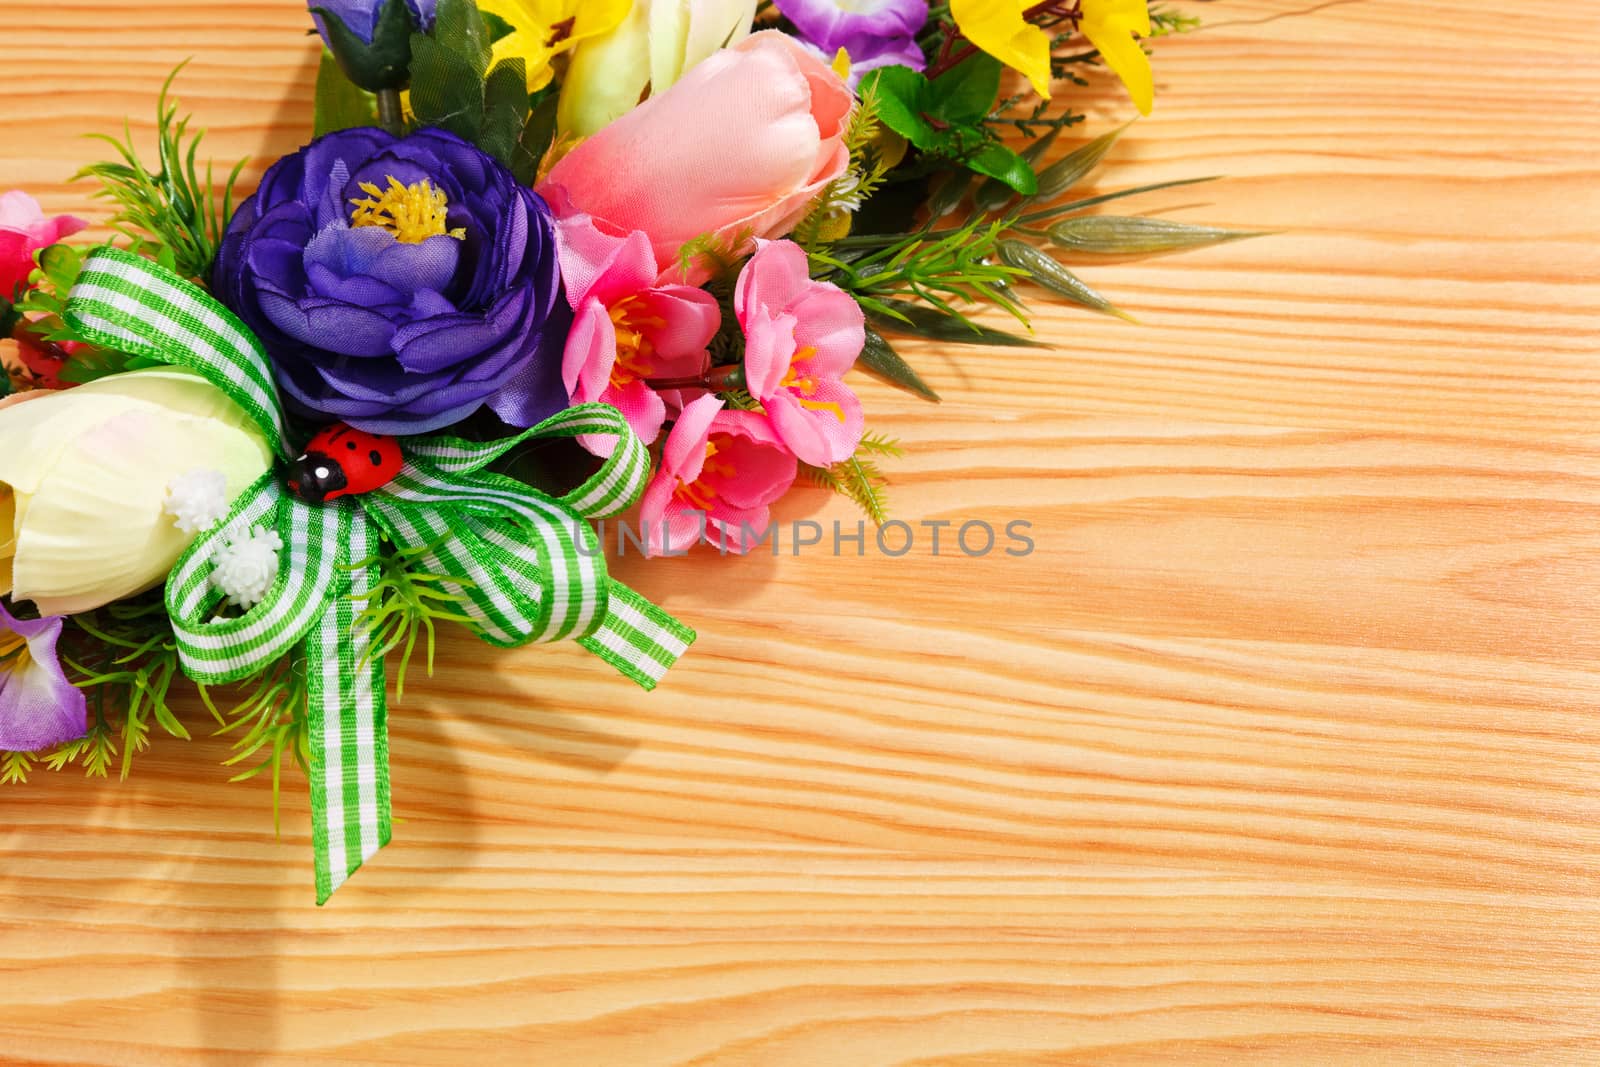 floral arrangement on a wooden texture